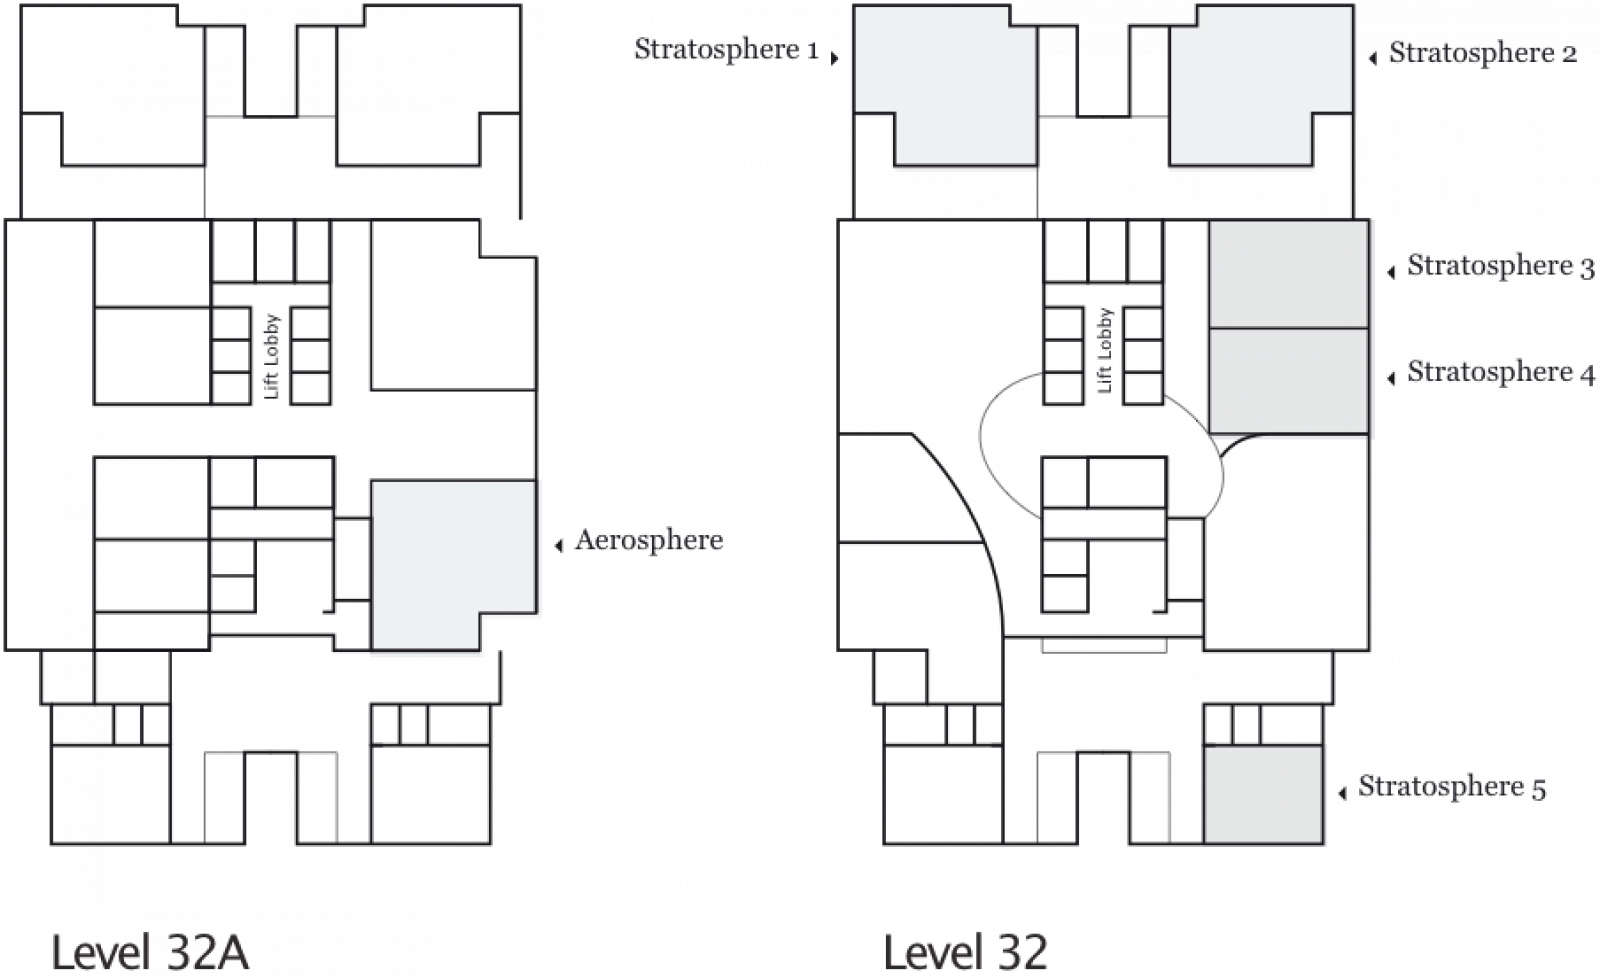 Meeting rooms floor plan